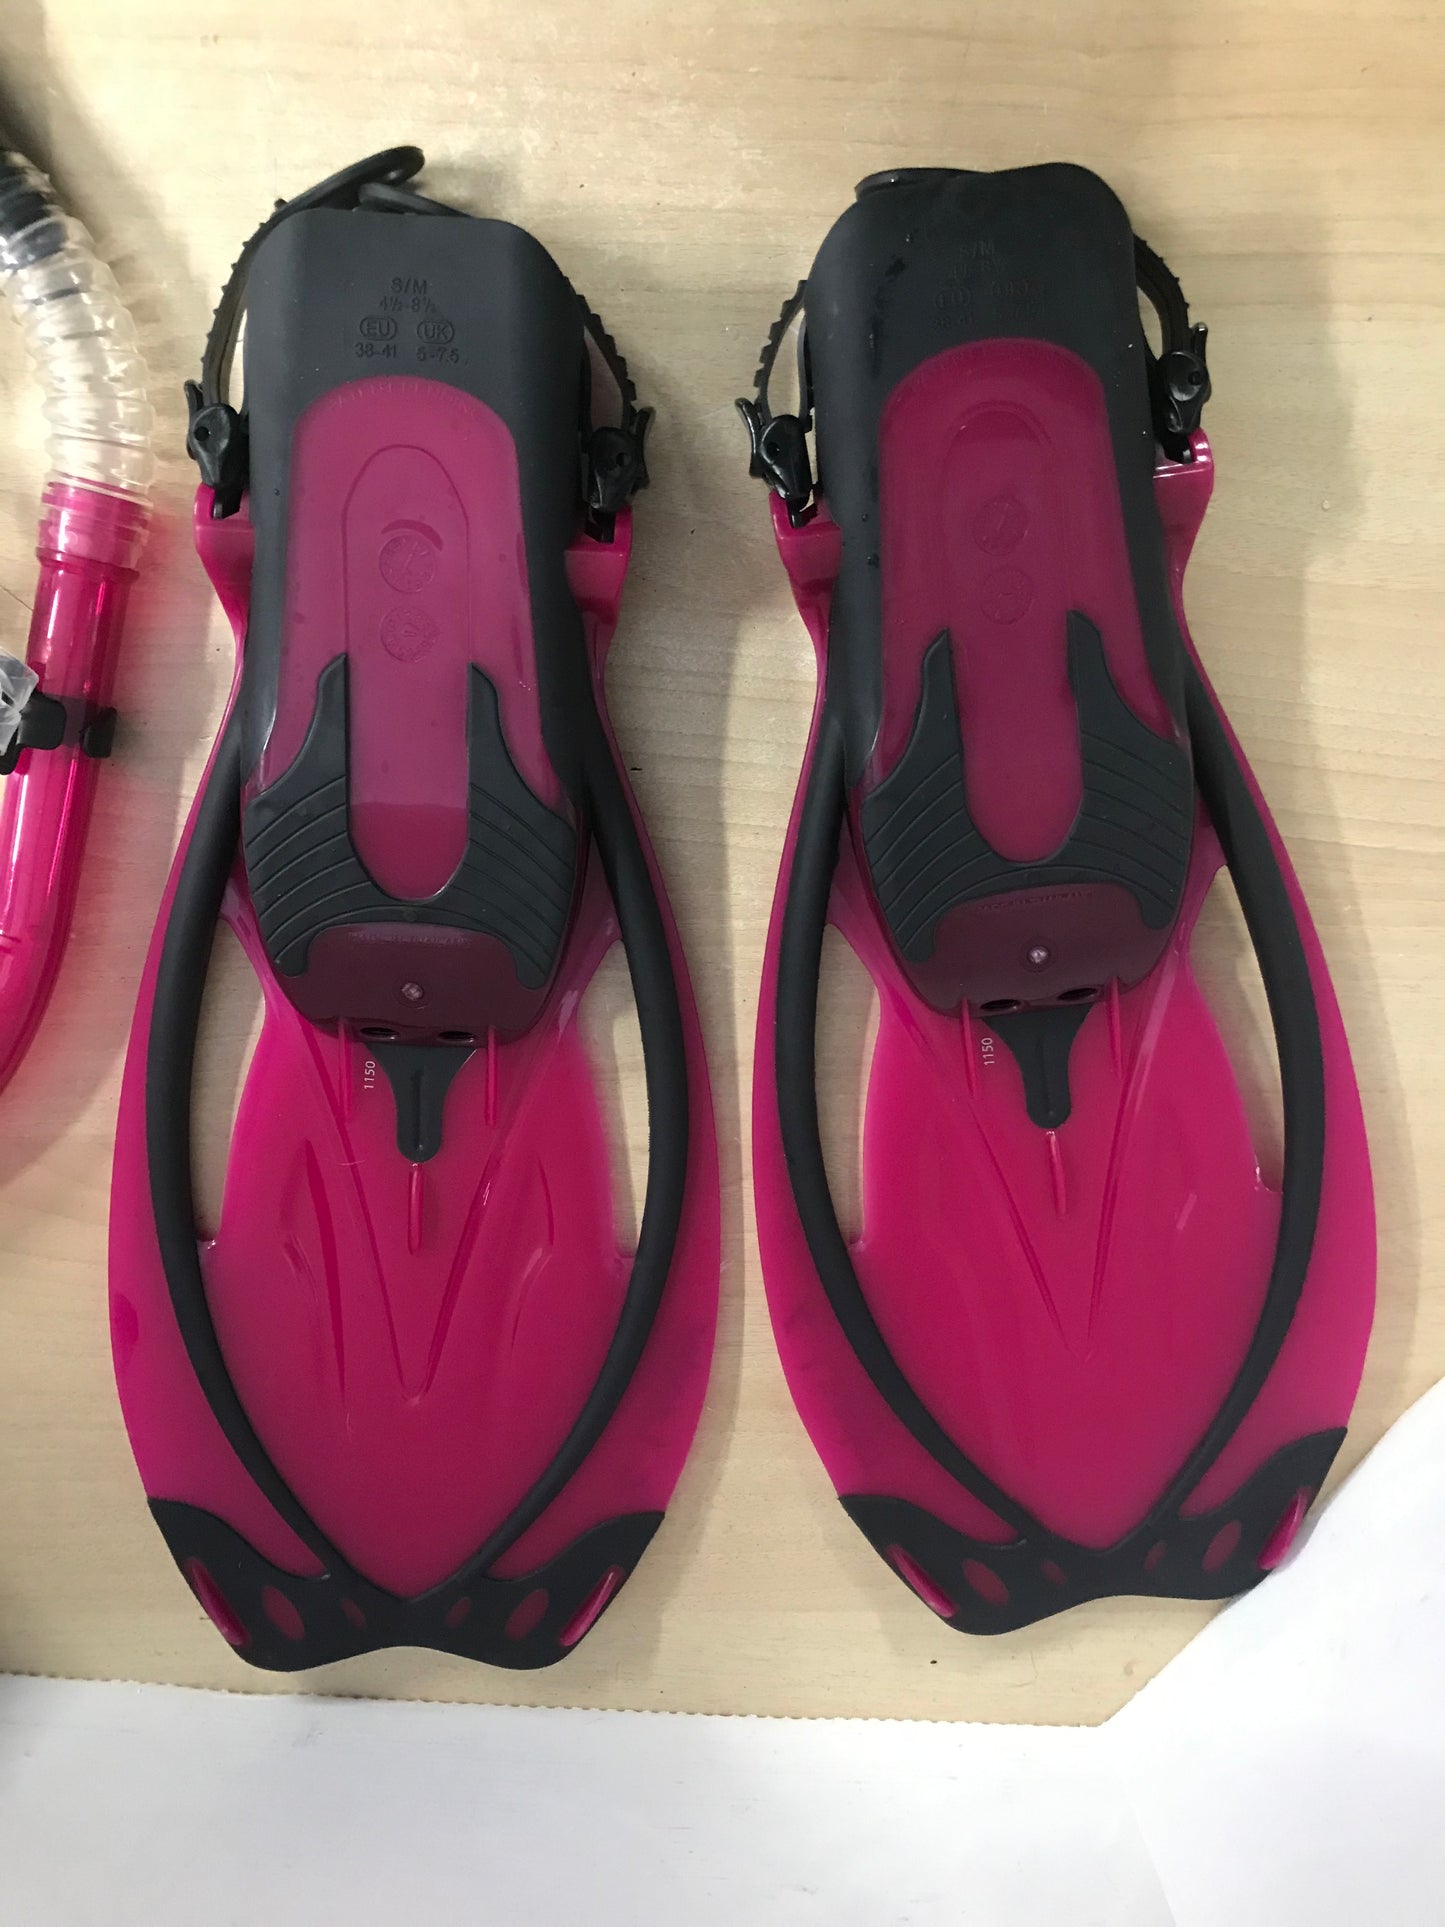 Snorkel Dive Fins Ladies Shoe Size 4.5-8.5 Leader Raspberry and Grey Excellent